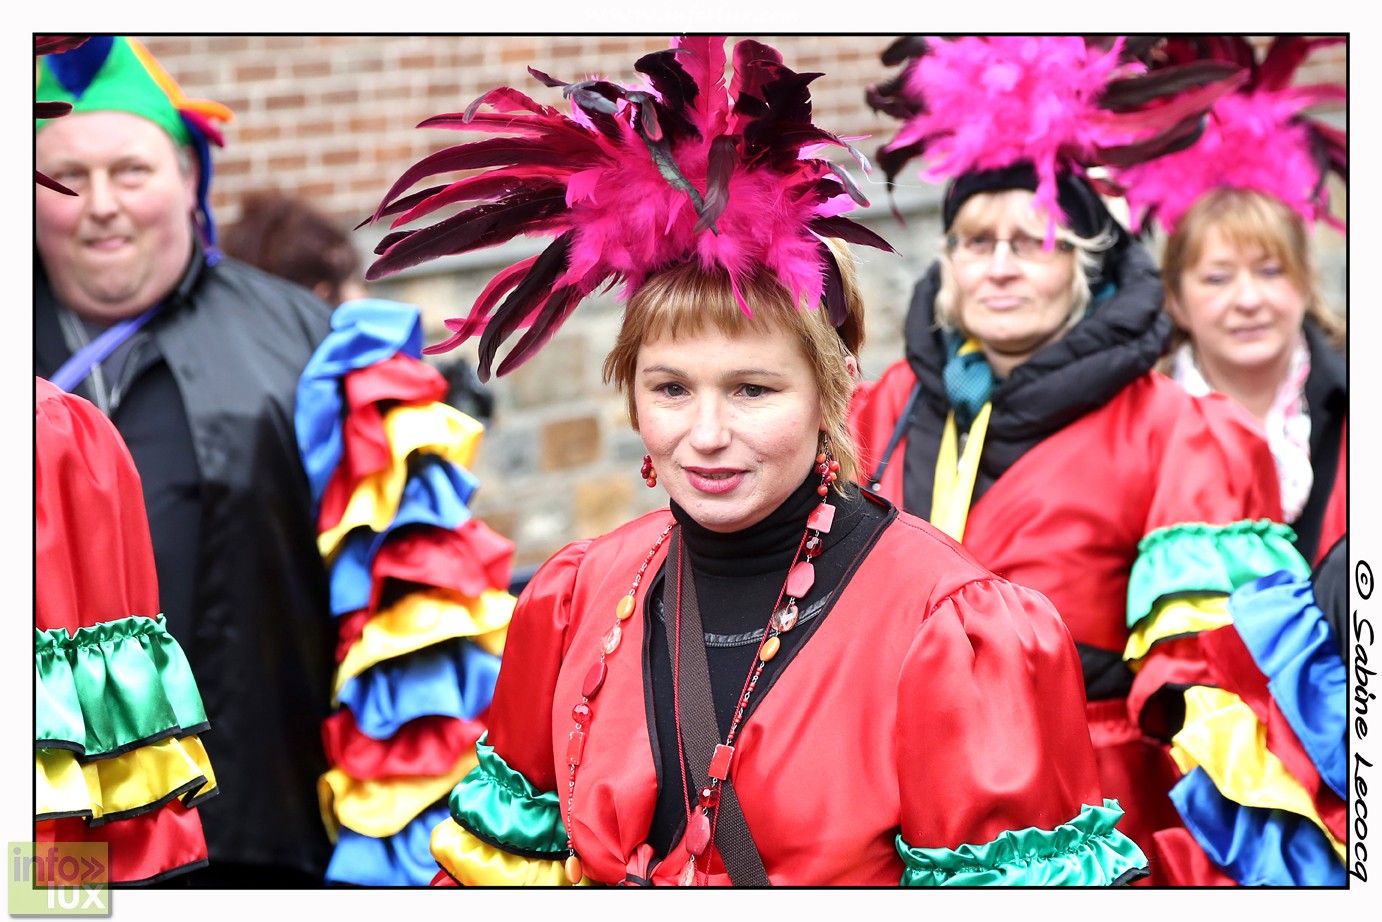 images/stories/PHOTOSREP/La-Roche-en-Ardenne/Carnaval2/Carnaval-larocheb039